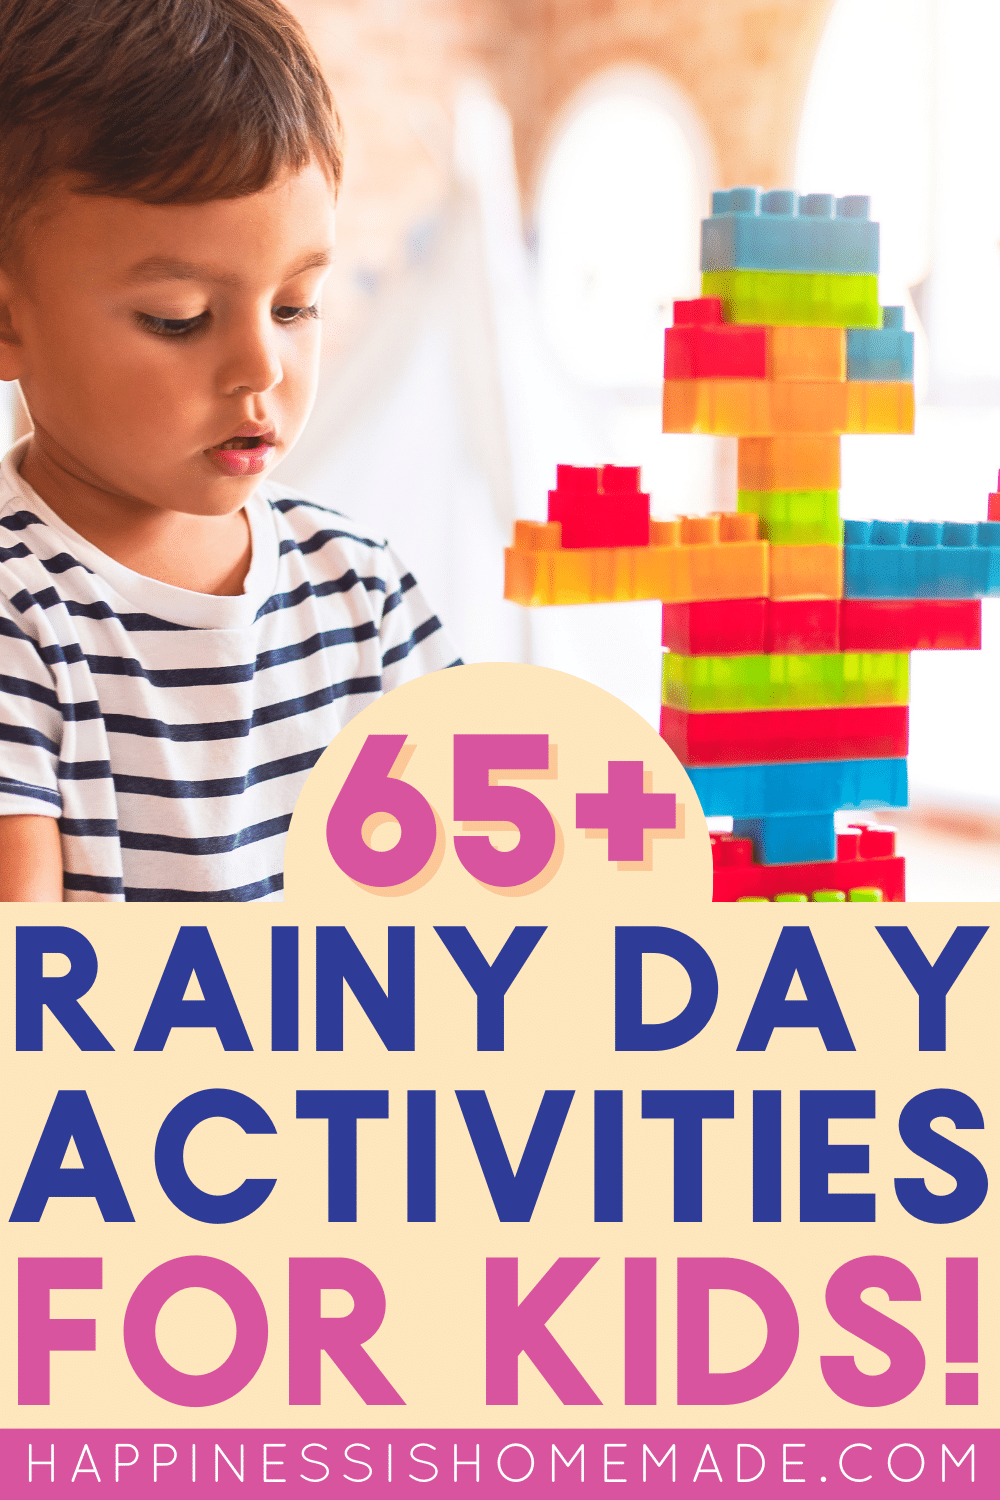 65+ Rainy Day Kids Activities & Printable